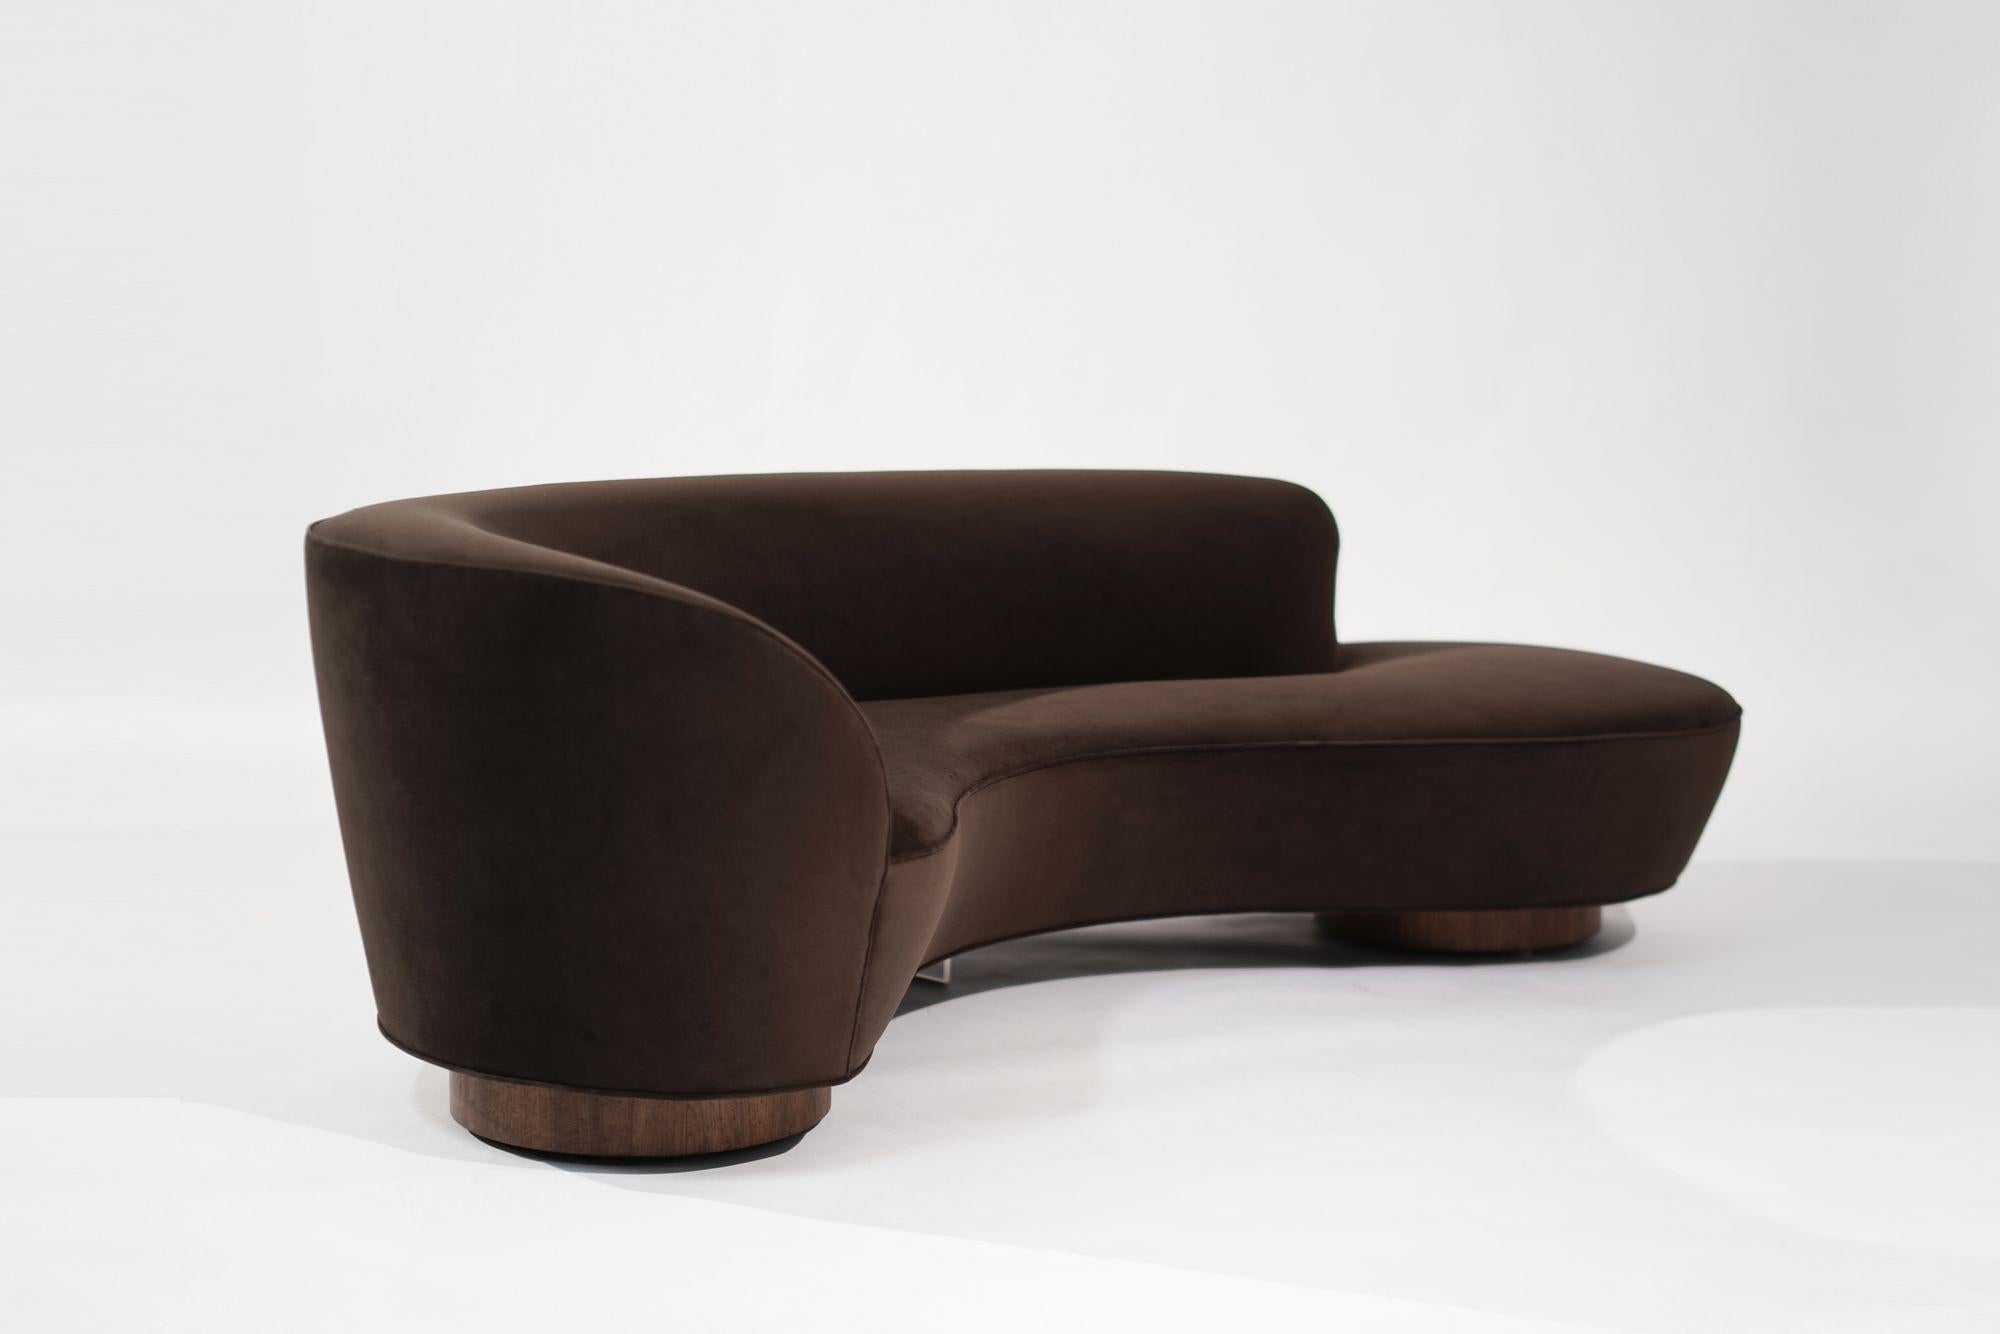 20th Century Serpentine Sofa in Chocolate Velvet by Vladimir Kagan, C. 1970s For Sale